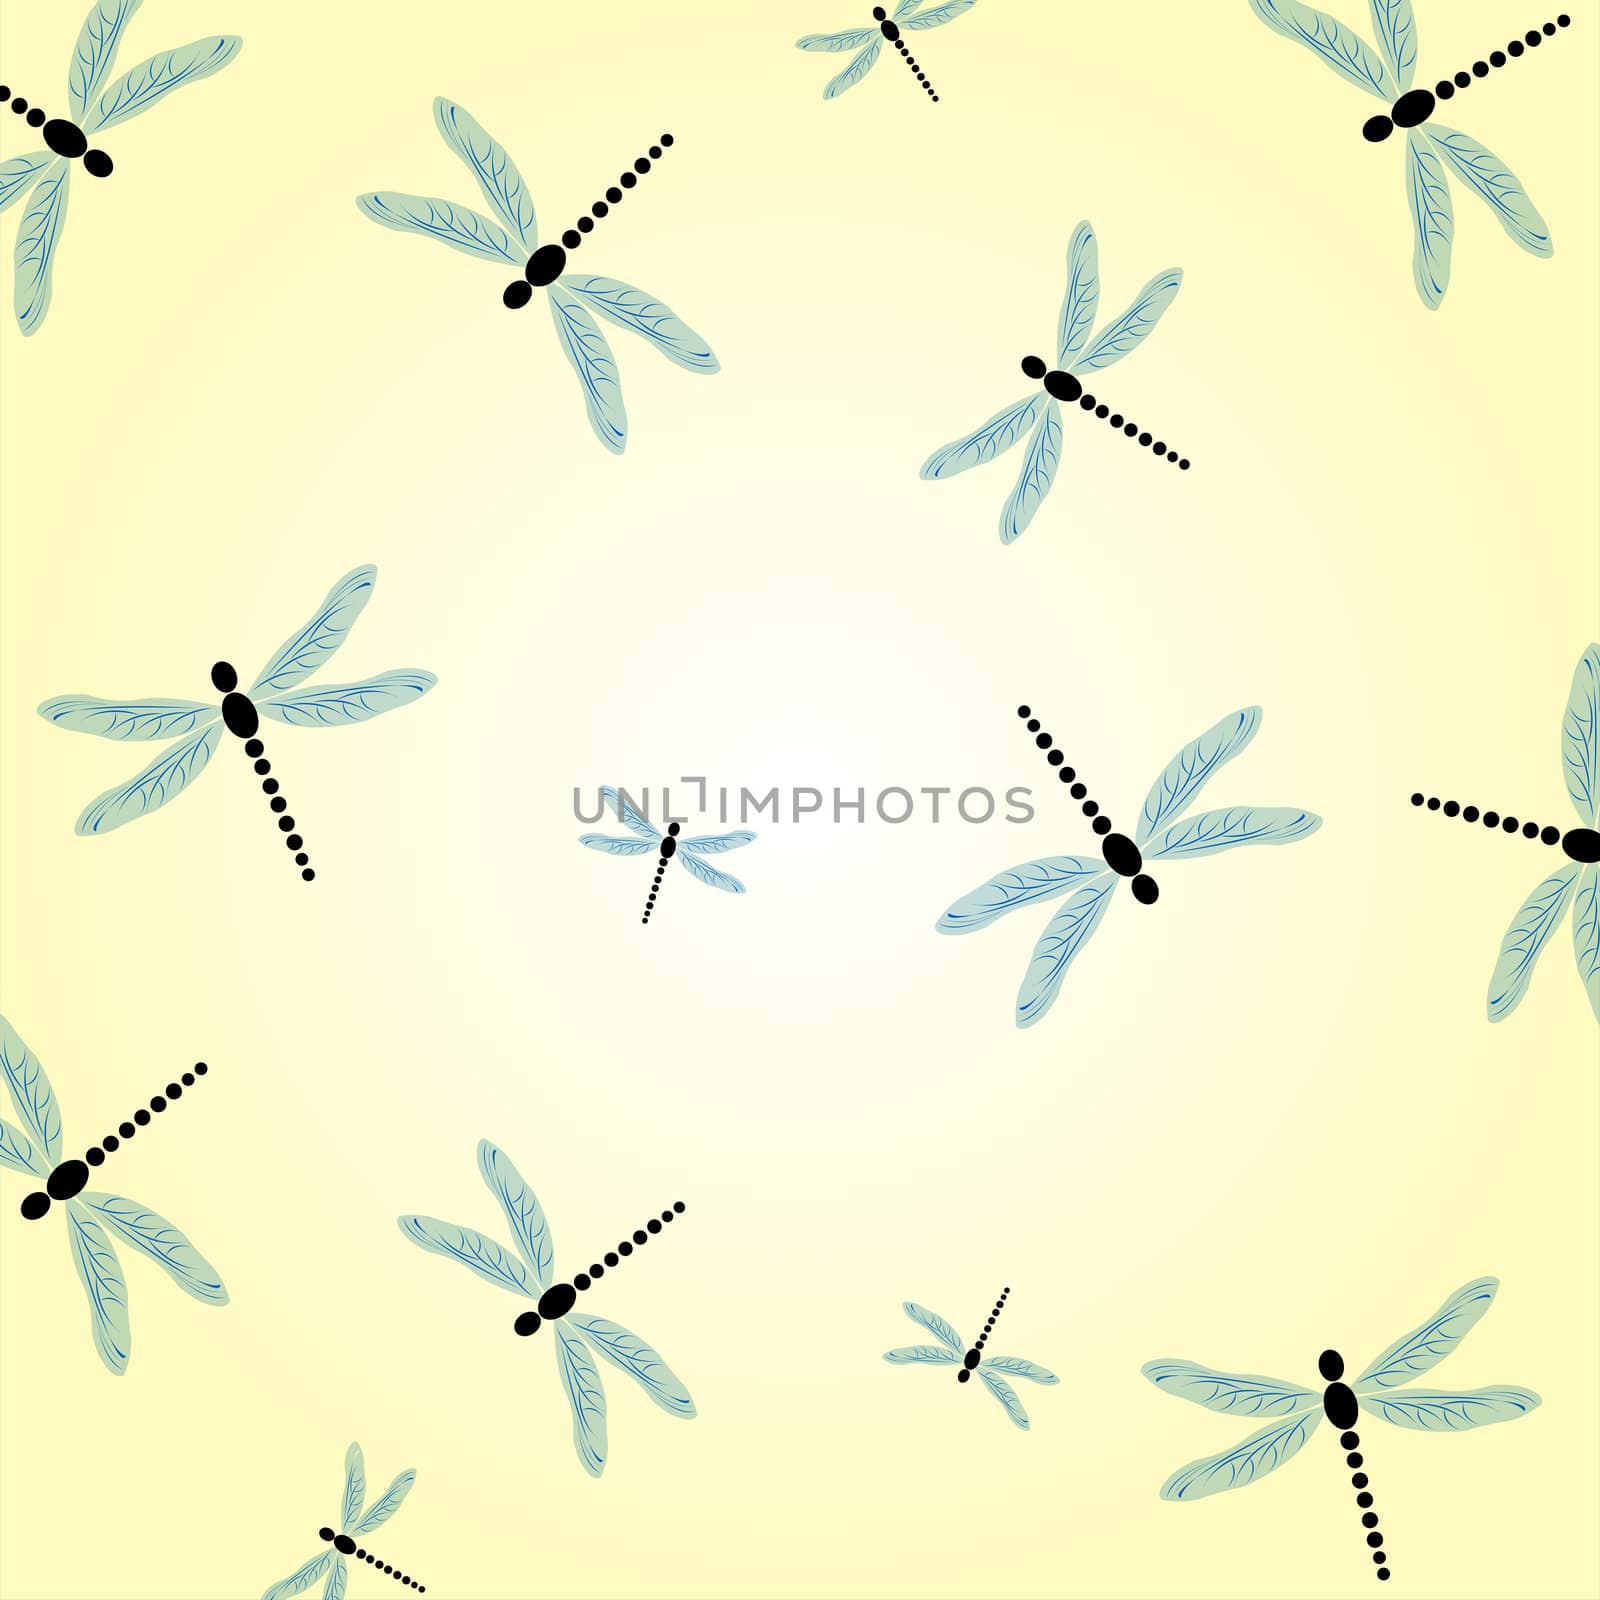 Dragonflies by Lirch